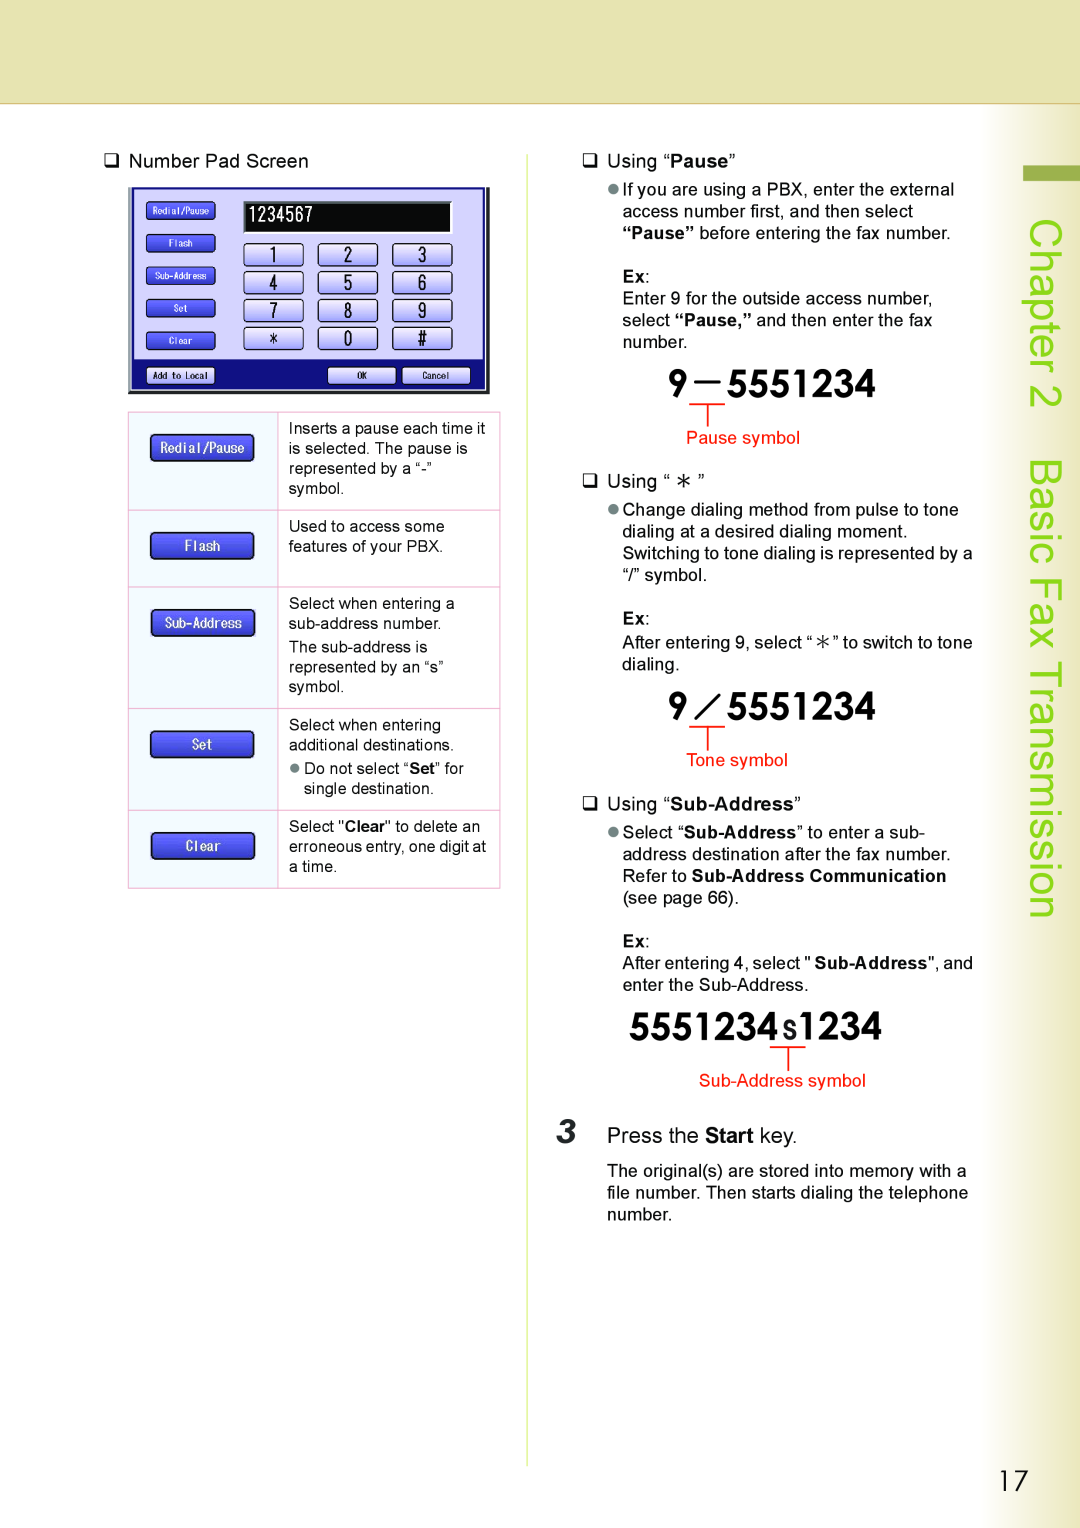 Philips DP-C262 manual Basic, Press the Start key, Refer to Sub-Address Communication 